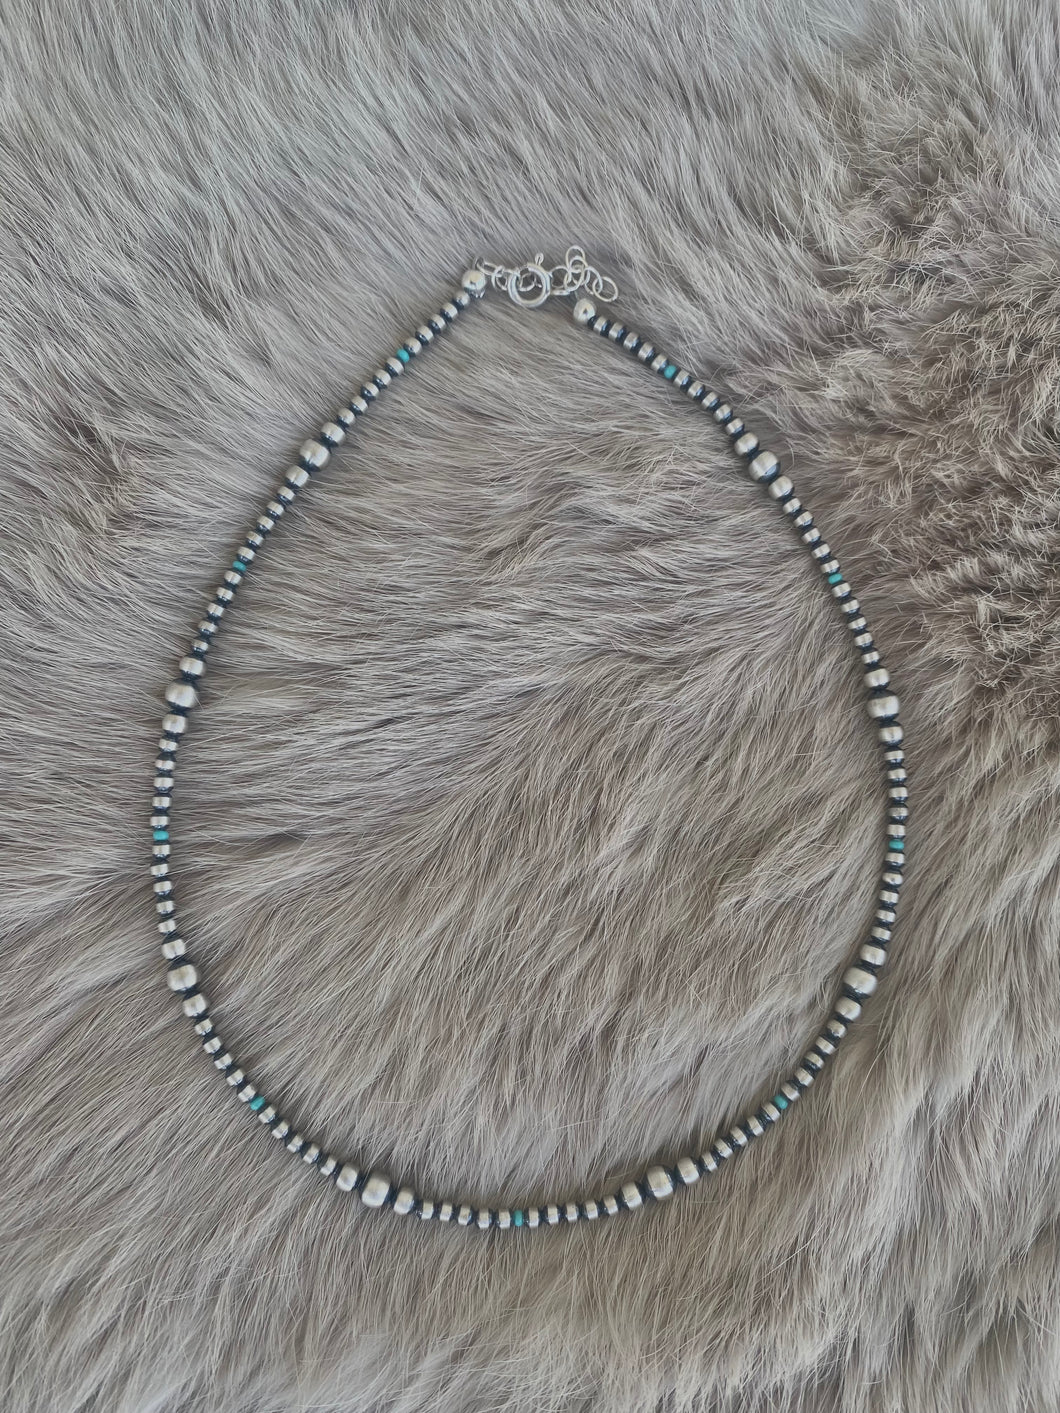 The Kali Navajo Pearl Necklace